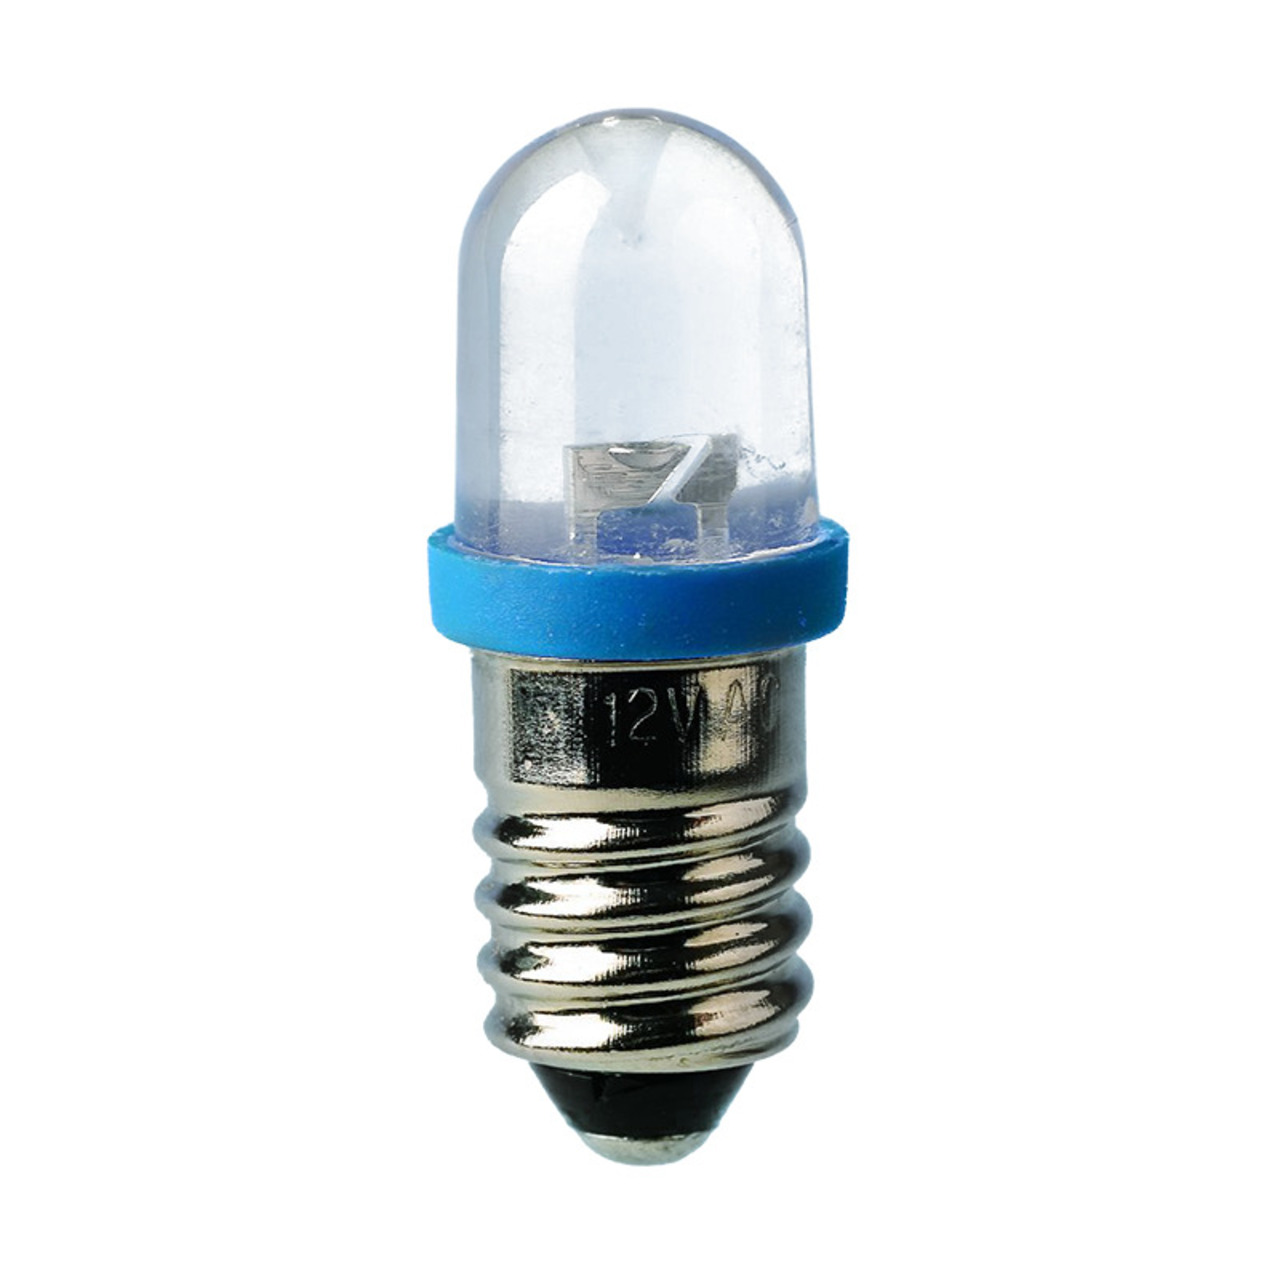 Barthelme LED-Lampe E10 mit Brckengleichrichter- 10 x 28 mm- 24 V- ultragrn unter Komponenten